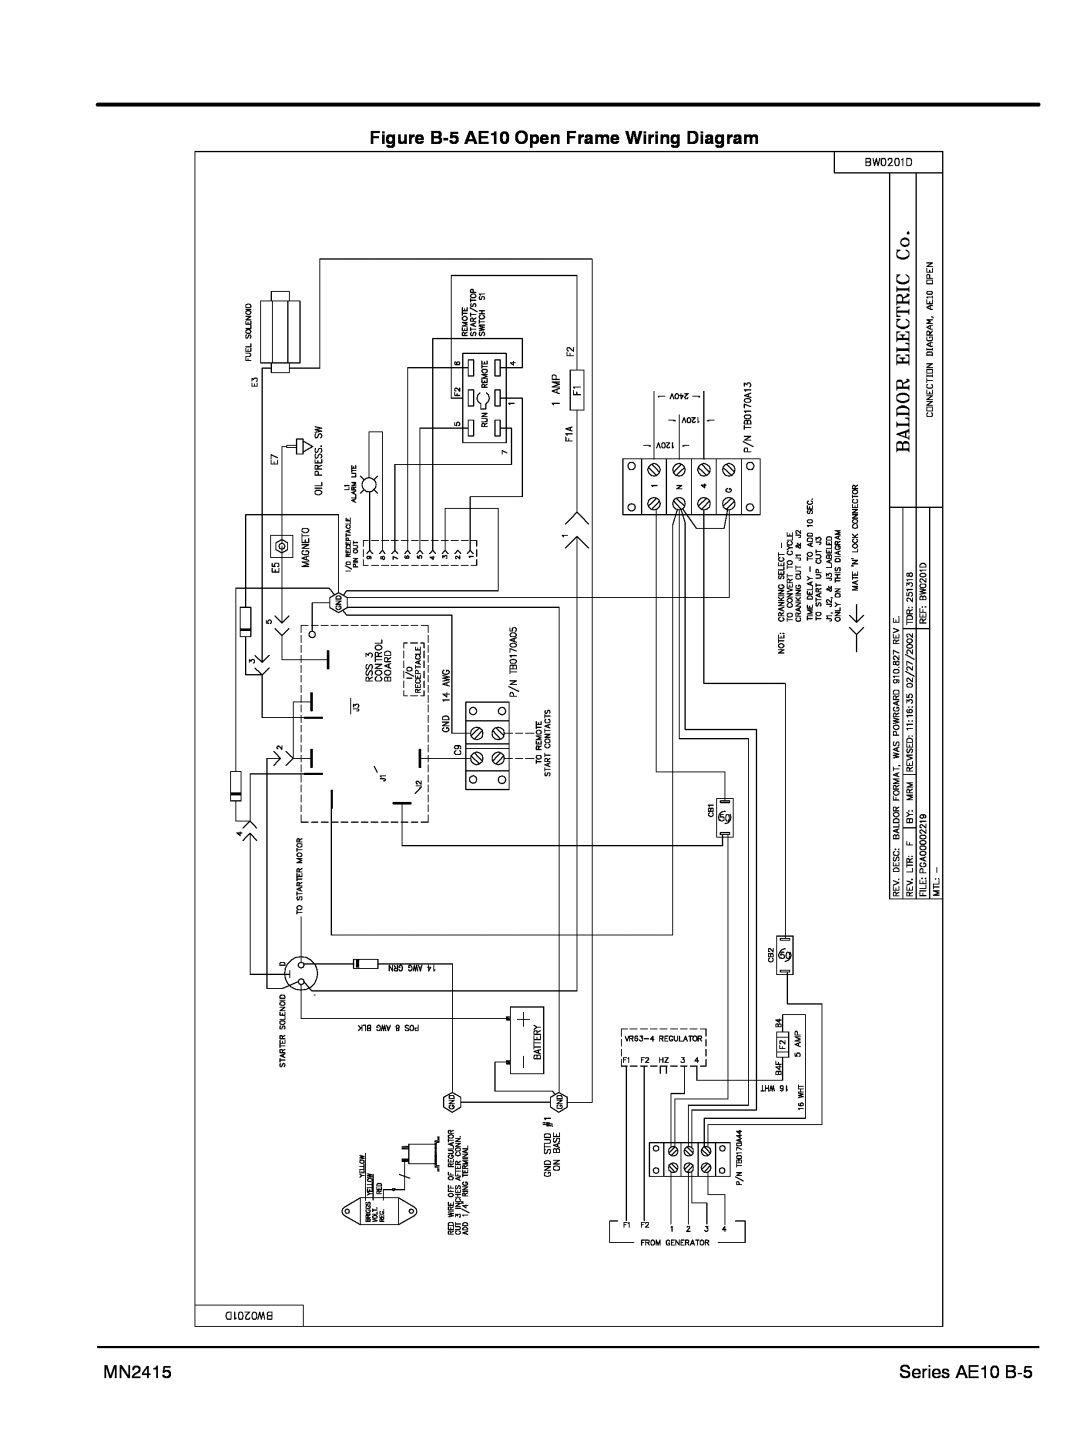 Baldor AE8, AE11, AE25 manual Figure B-5 AE10 Open Frame Wiring Diagram, MN2415, Series AE10 B-5 